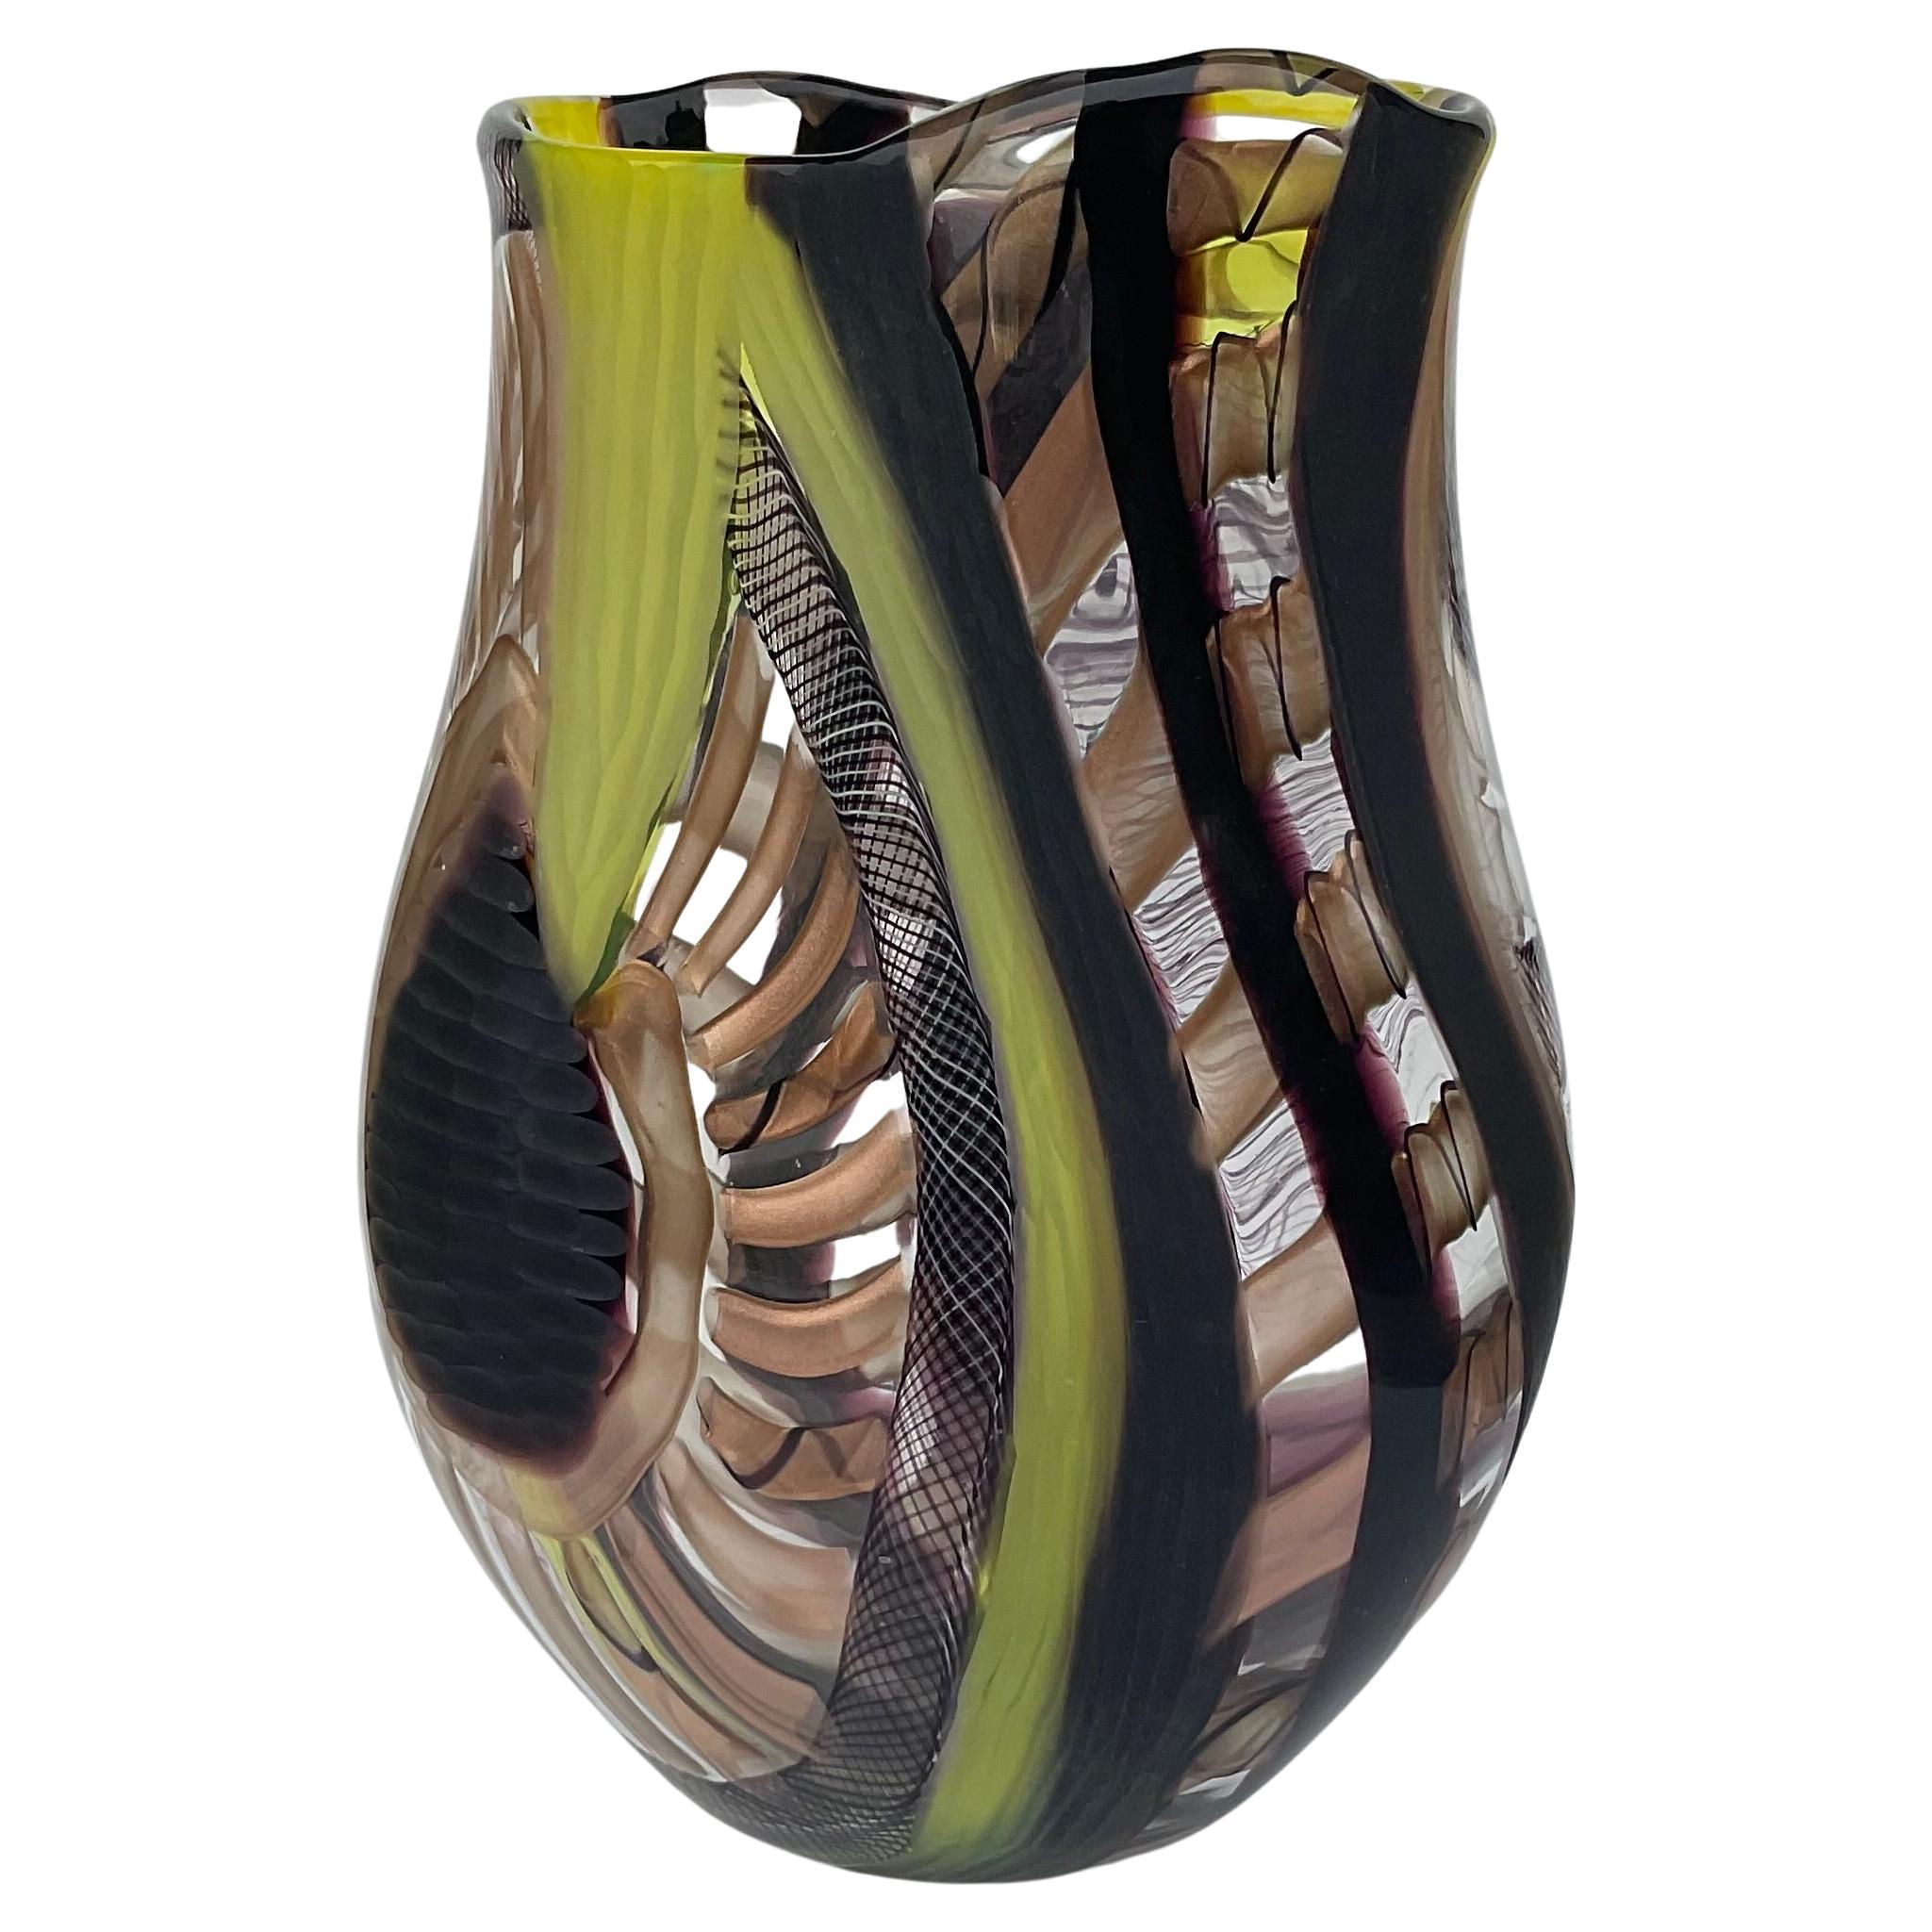 Signoretti Murano Art Glass Vase with Pinwheels and Battuto Work Signed 1 of 1